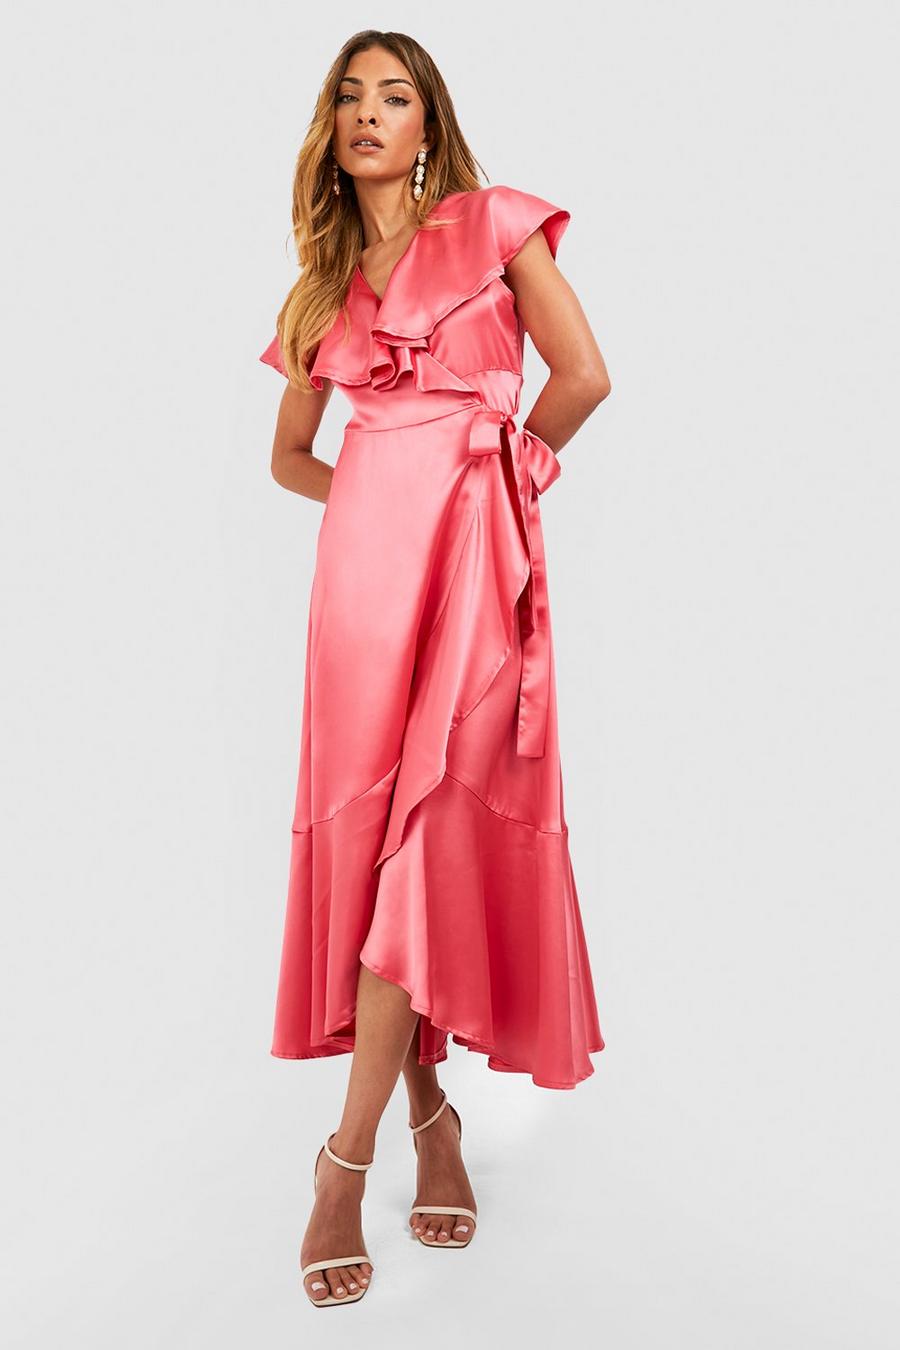 Hot pink Satin Ruffle Wrap Dress